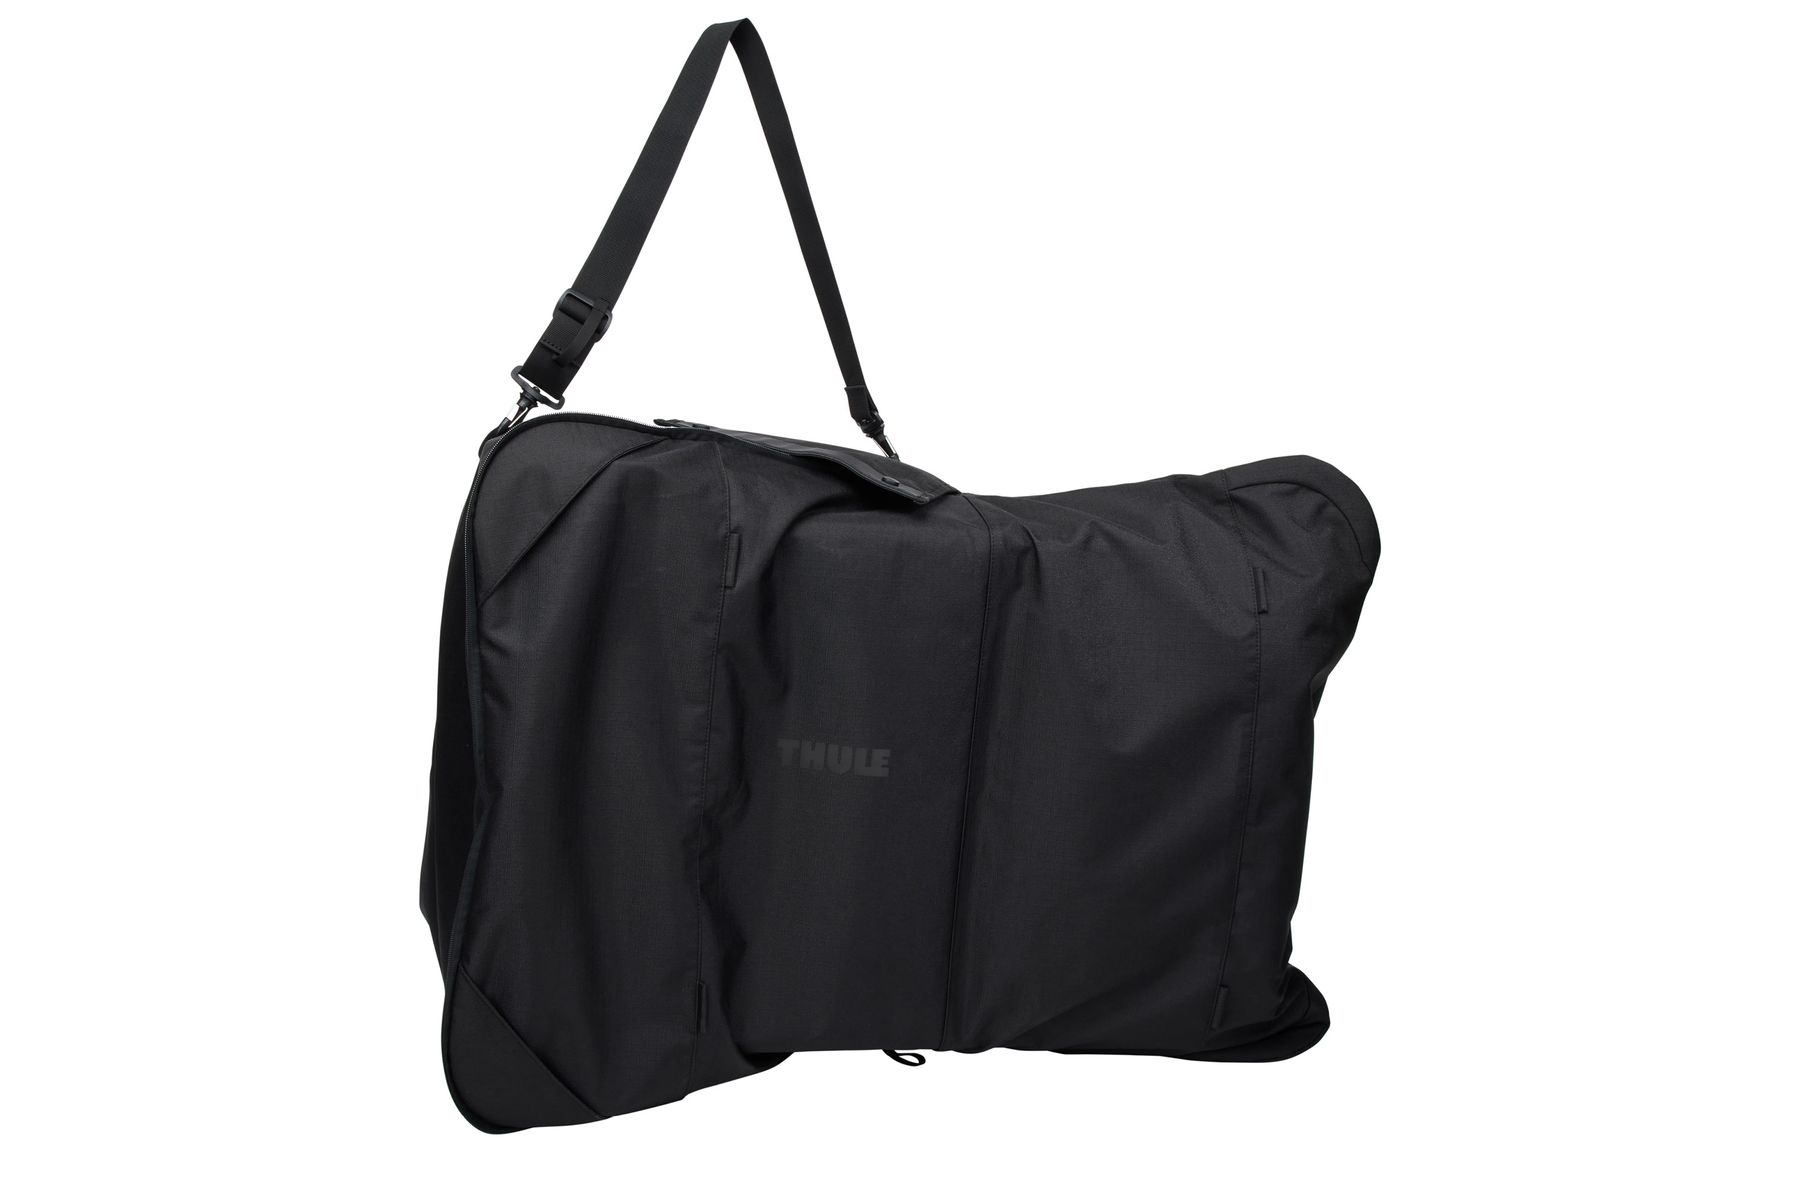 Thule Stroller Travel Bag Carrying handle